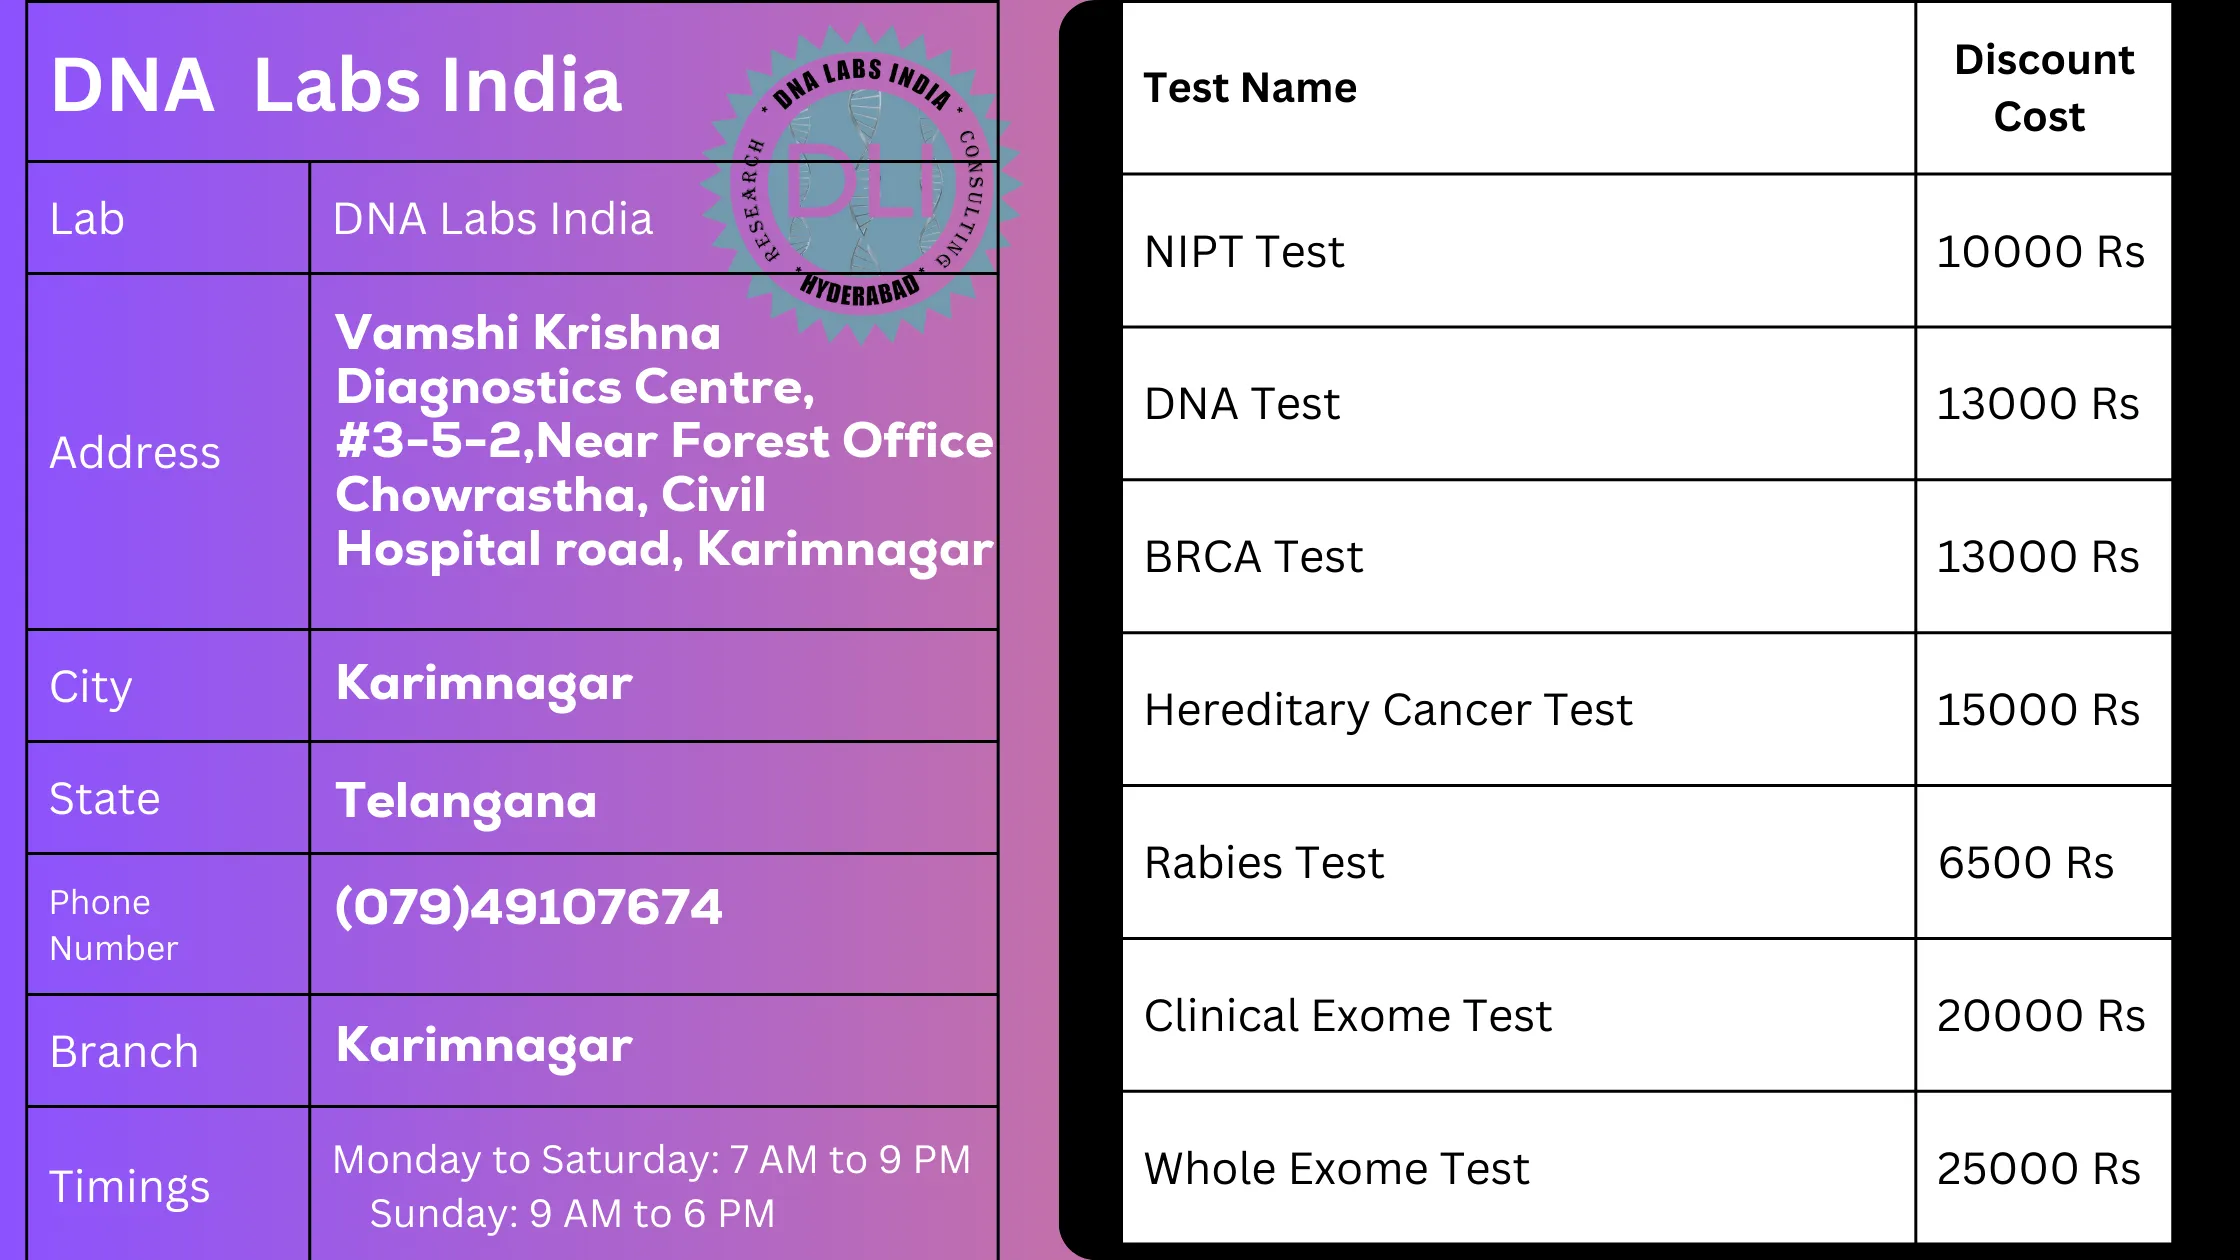 DNA Labs India - Karimnagar: Your Trusted Genetic Testing Partner